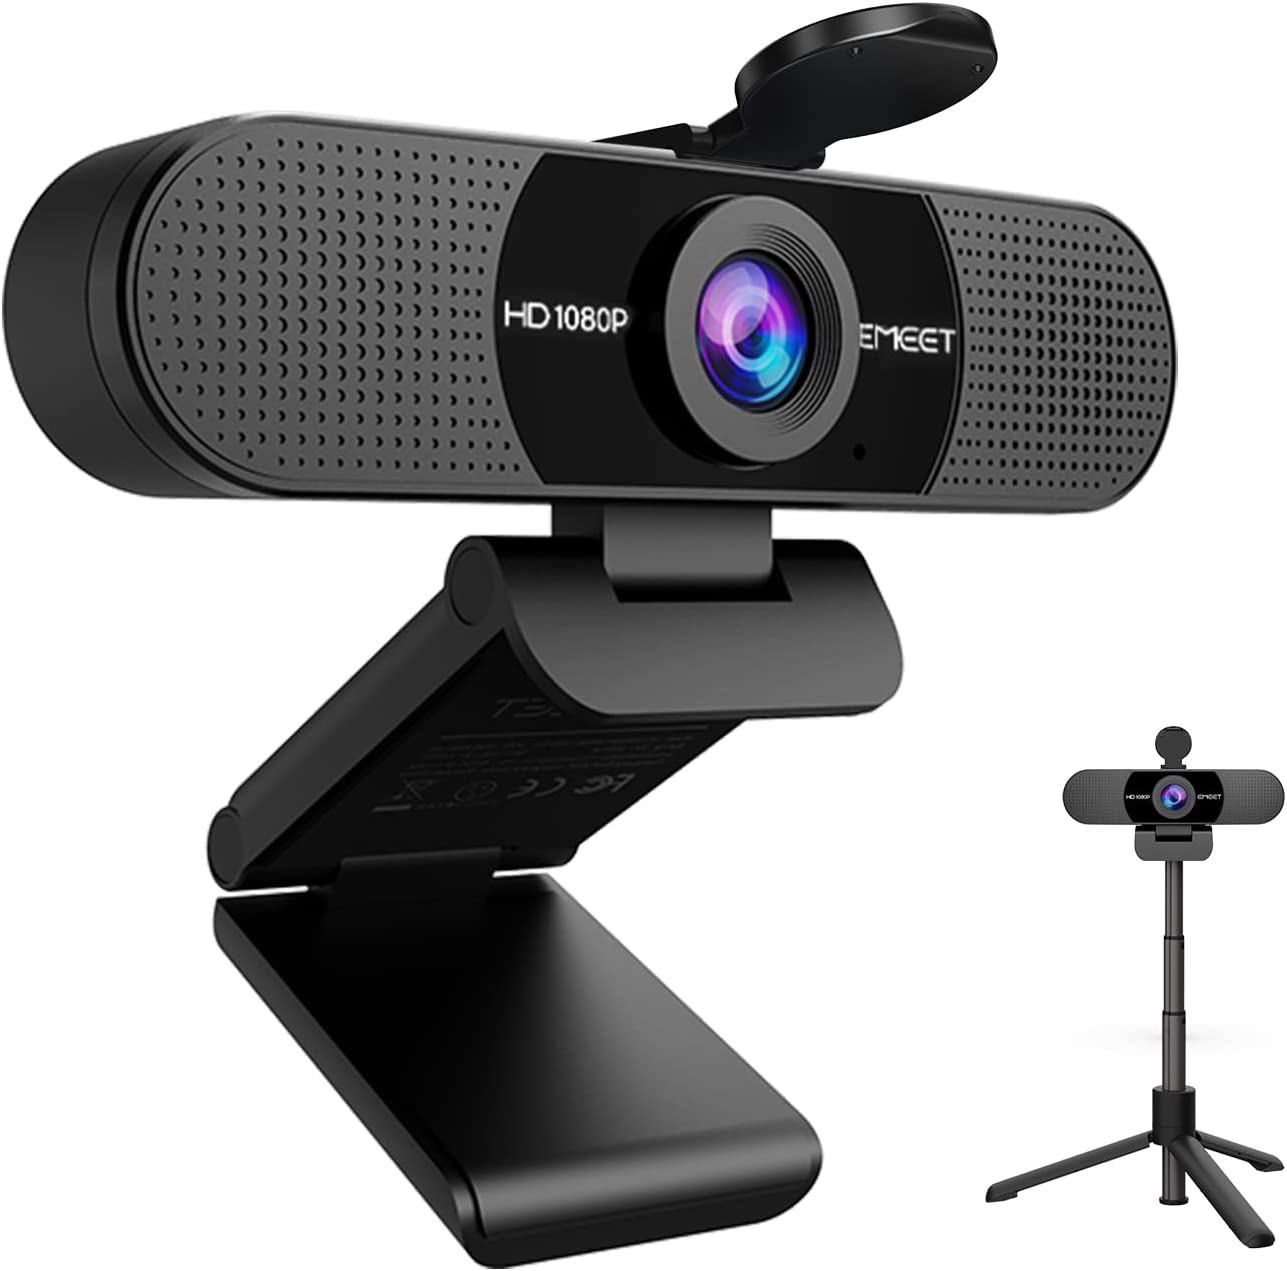 EMEET C960 Webcam with Tripod, 1080p Webcam with [...]